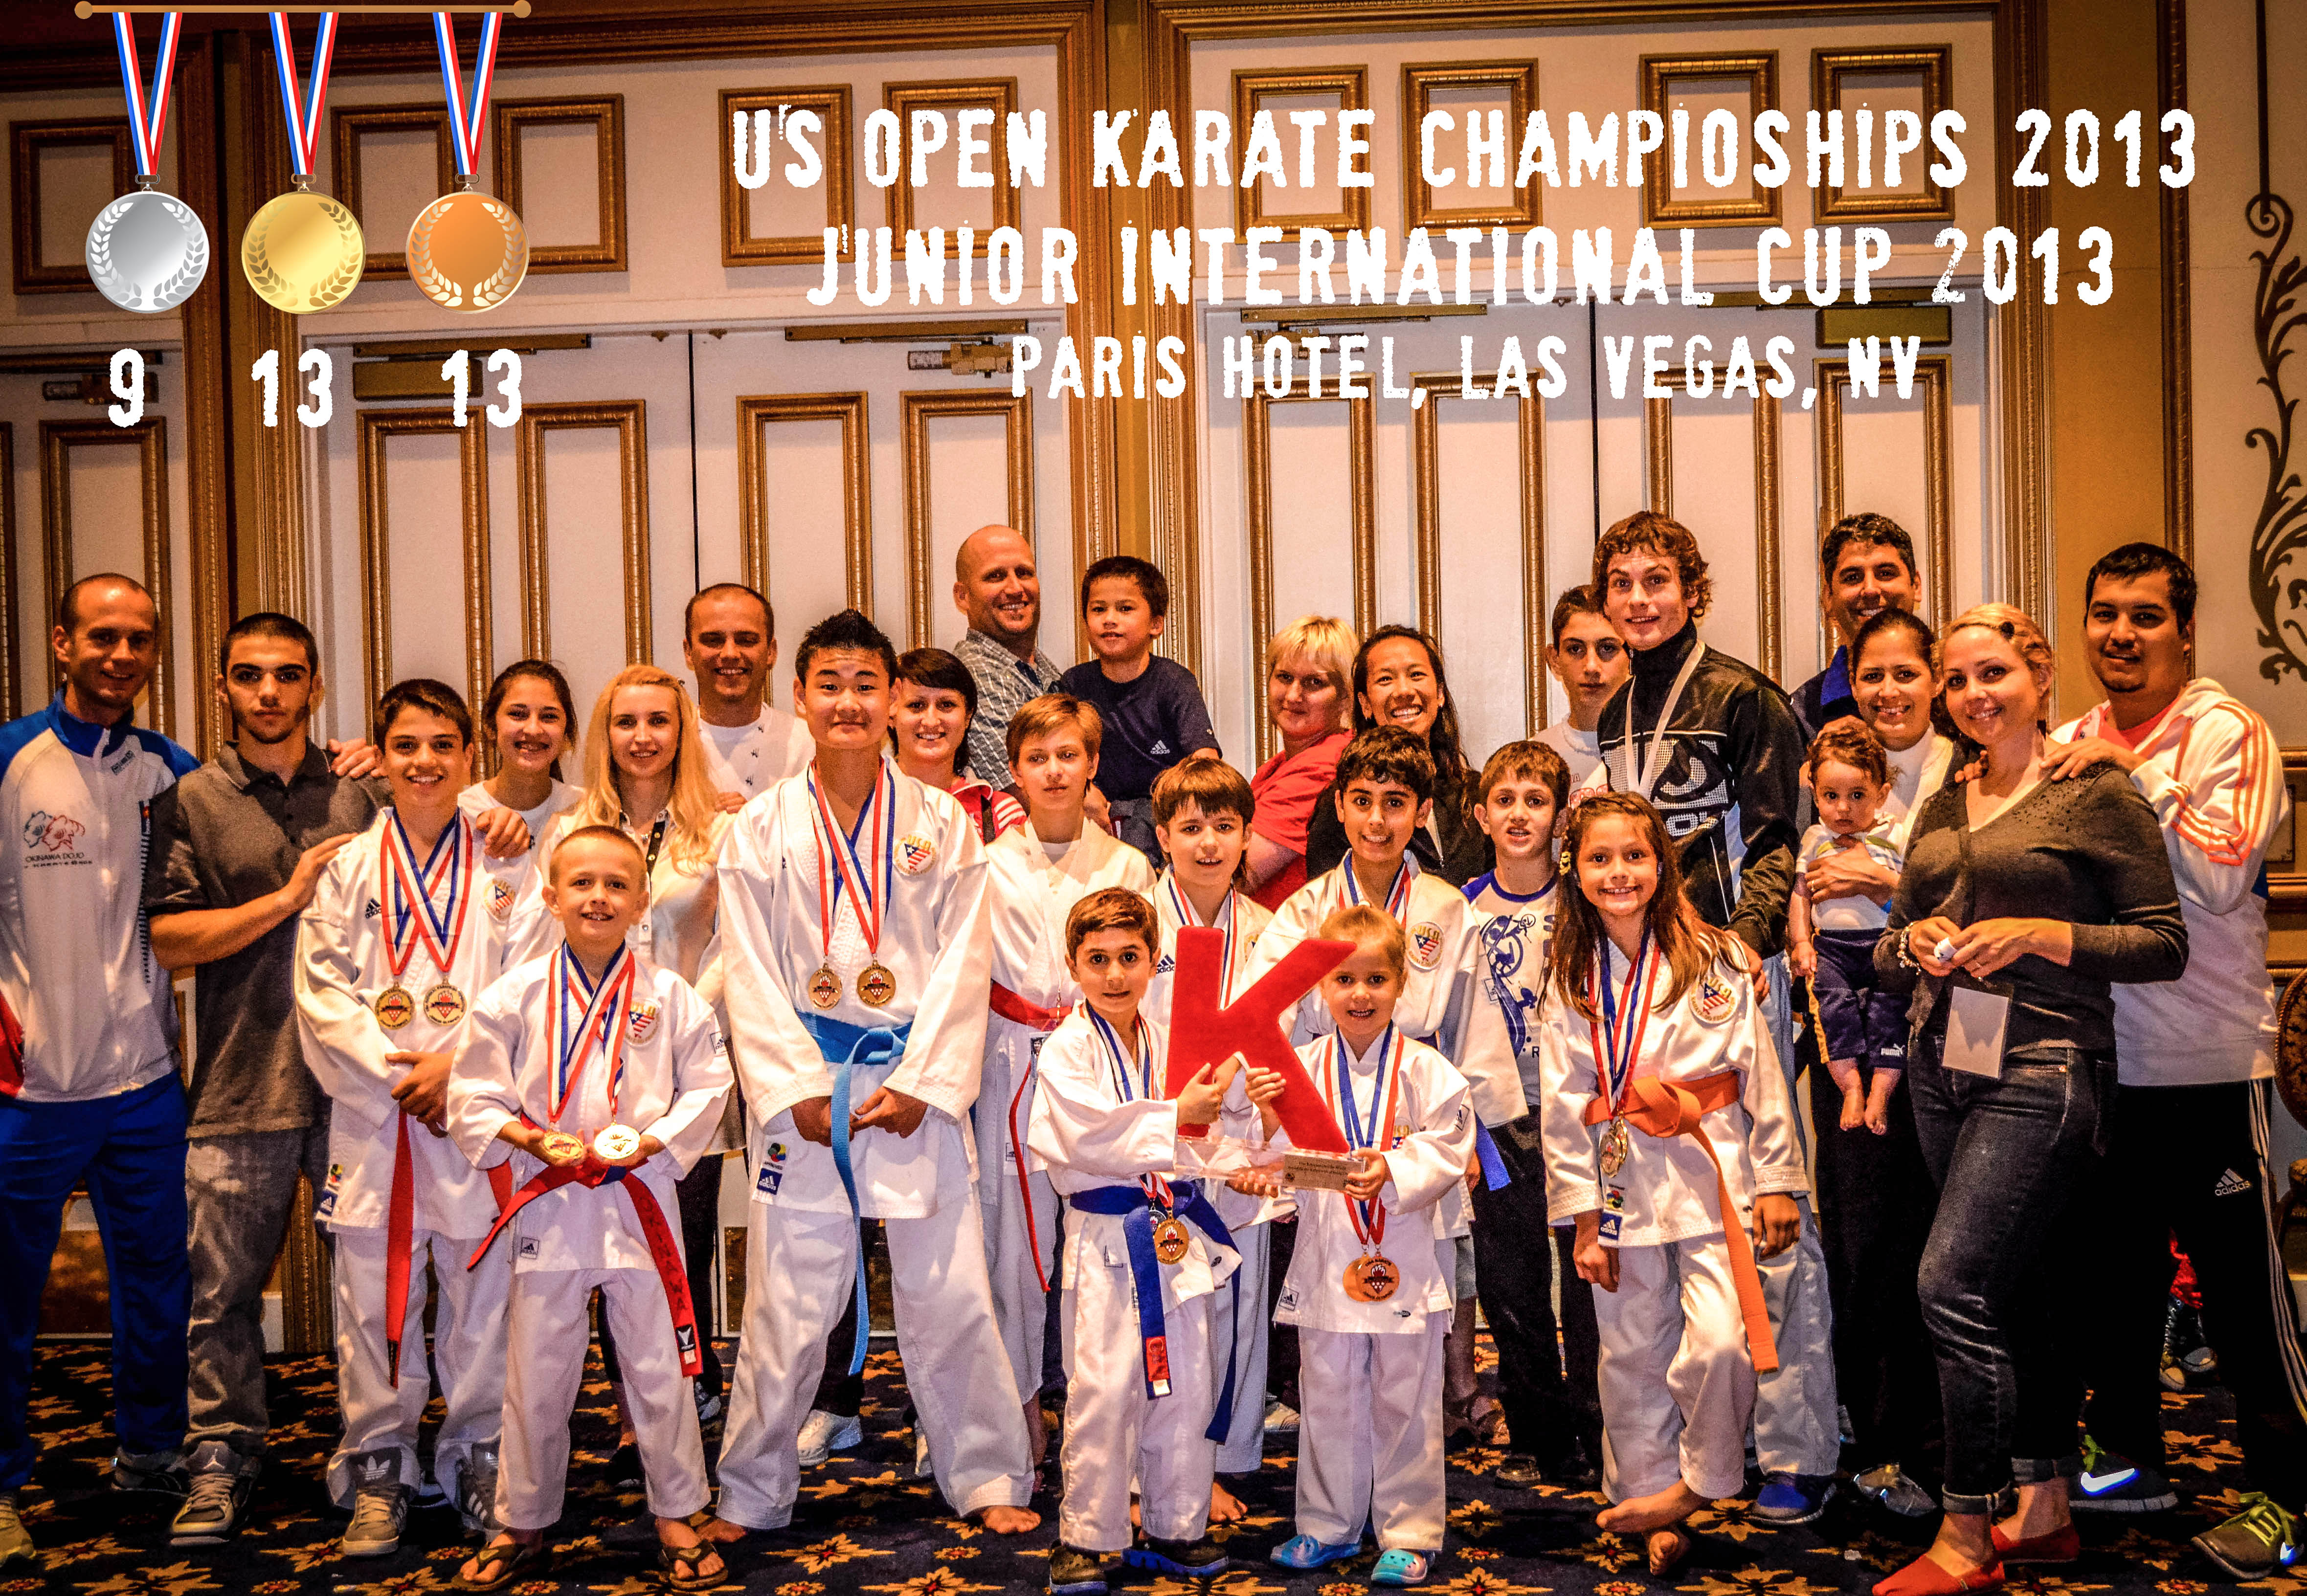 US Open and JR International Karate Championship